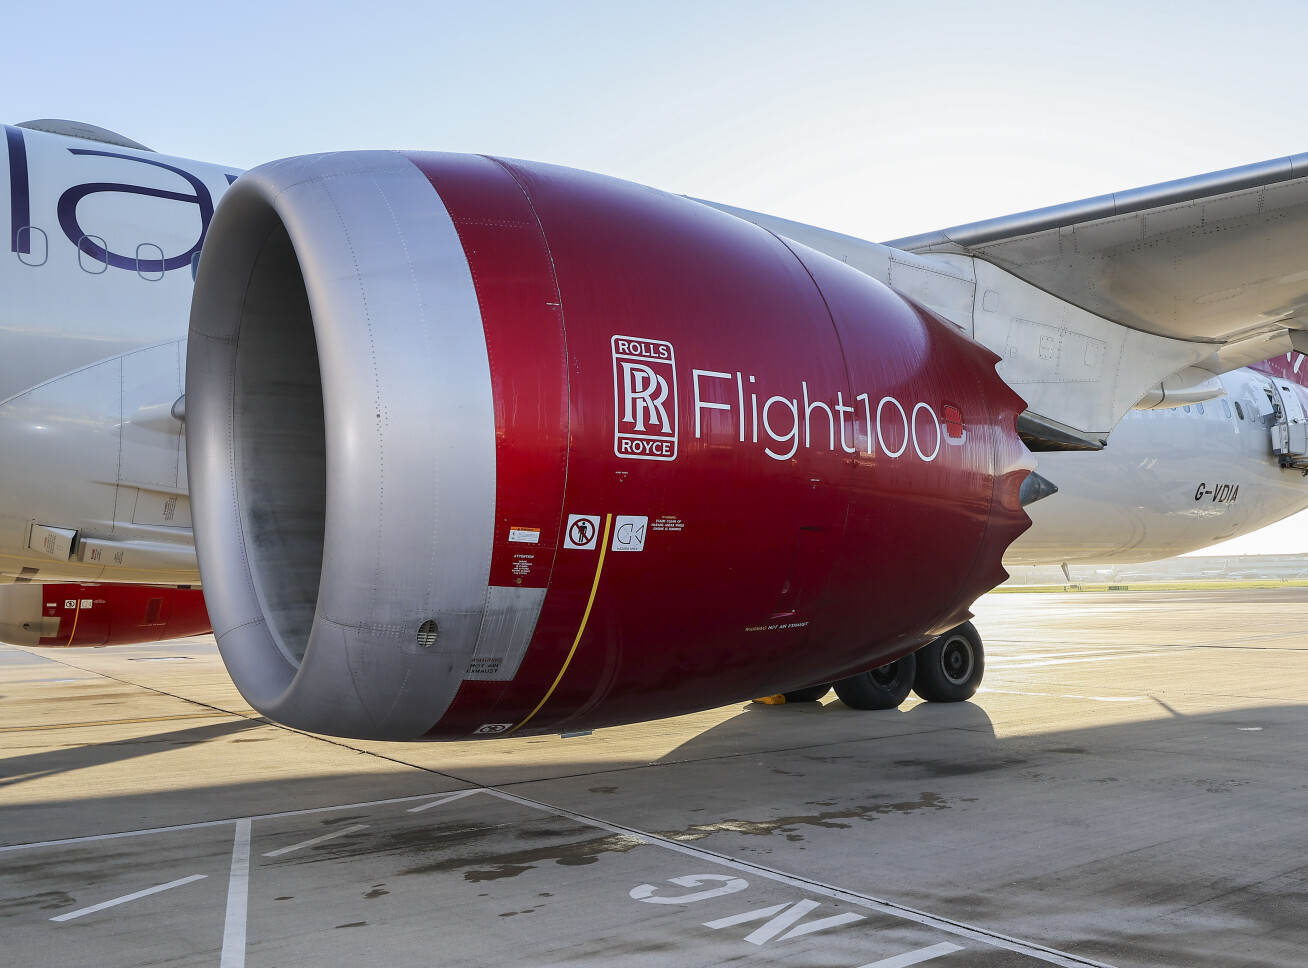 The Virgin Atlantic Flight 100 parked at Heathrow